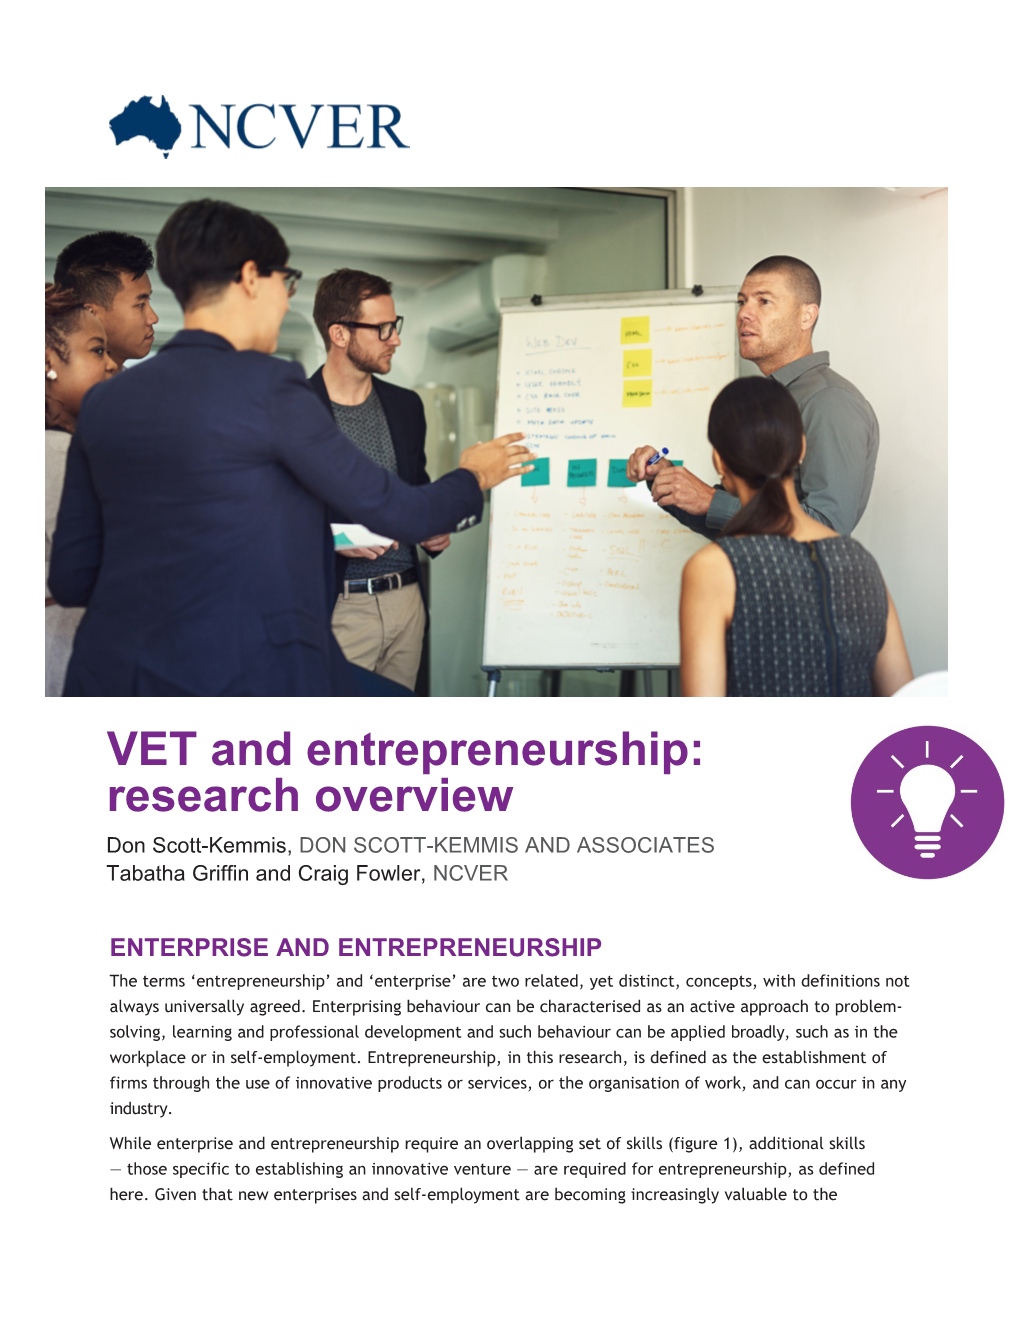 VET and Entrepreneurship: Research Overview